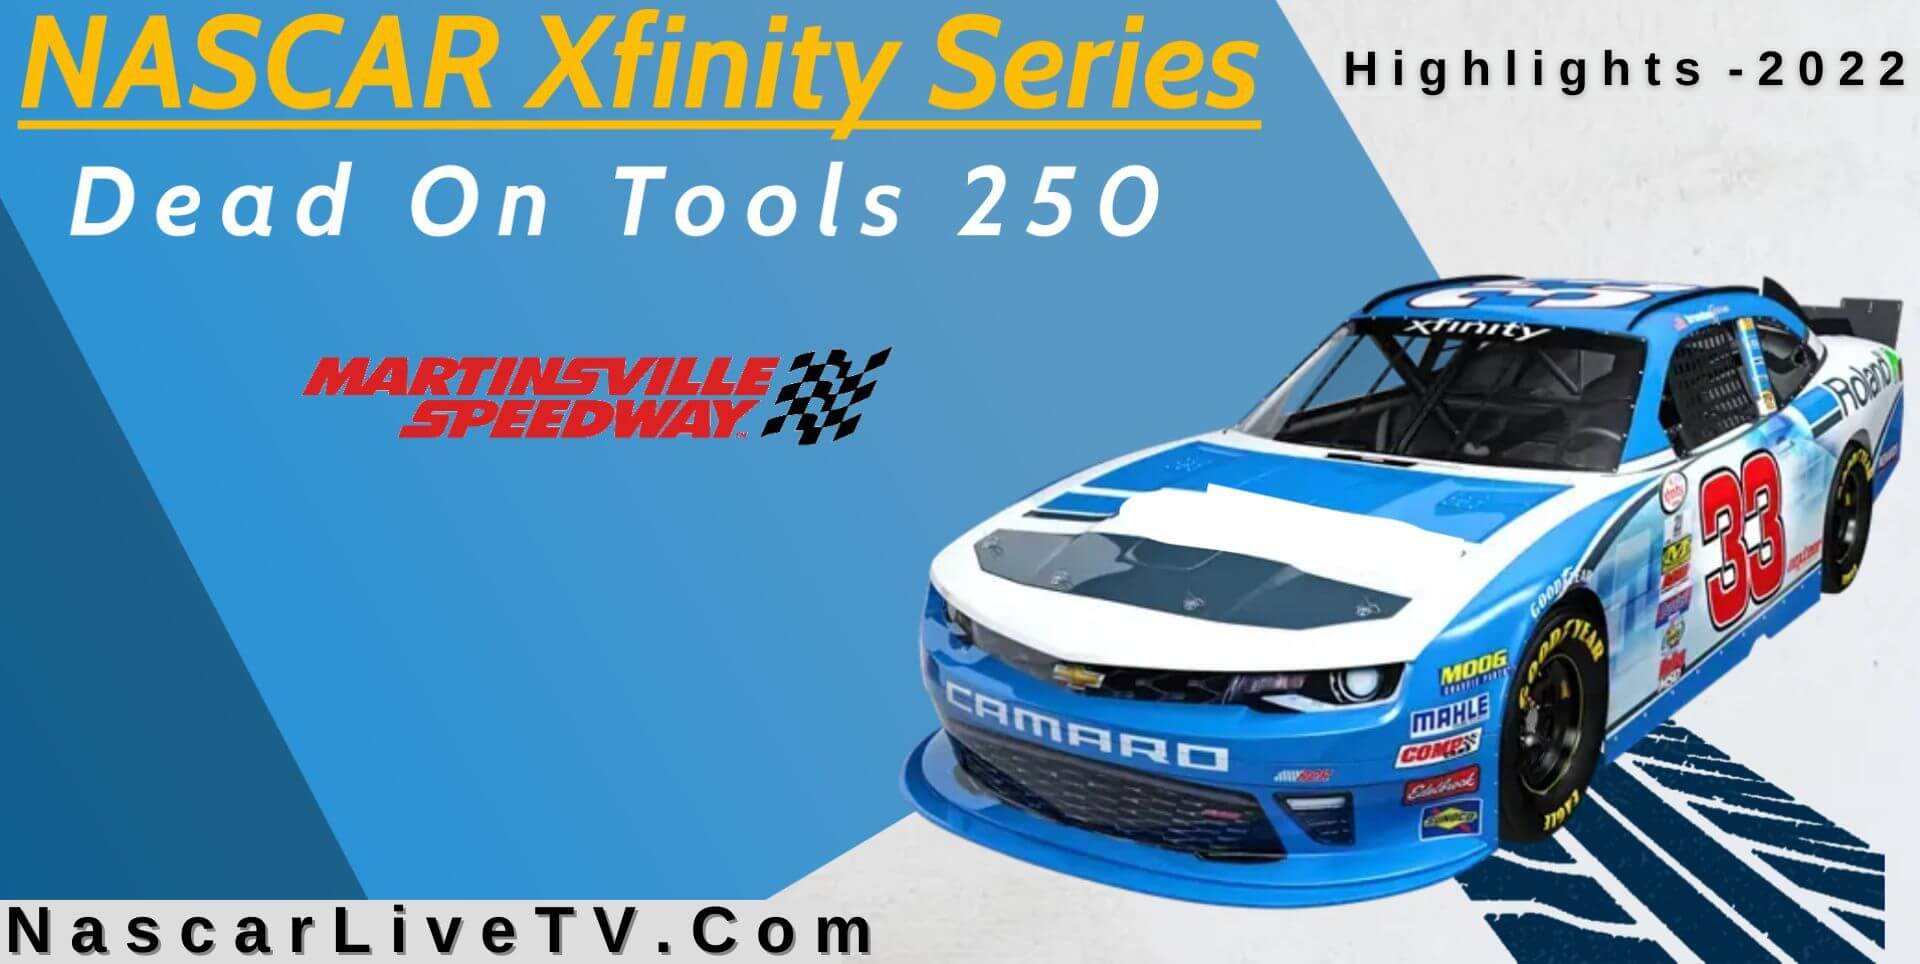 Dead On Tools 250 Highlights NASCAR Xfinity Series 2022